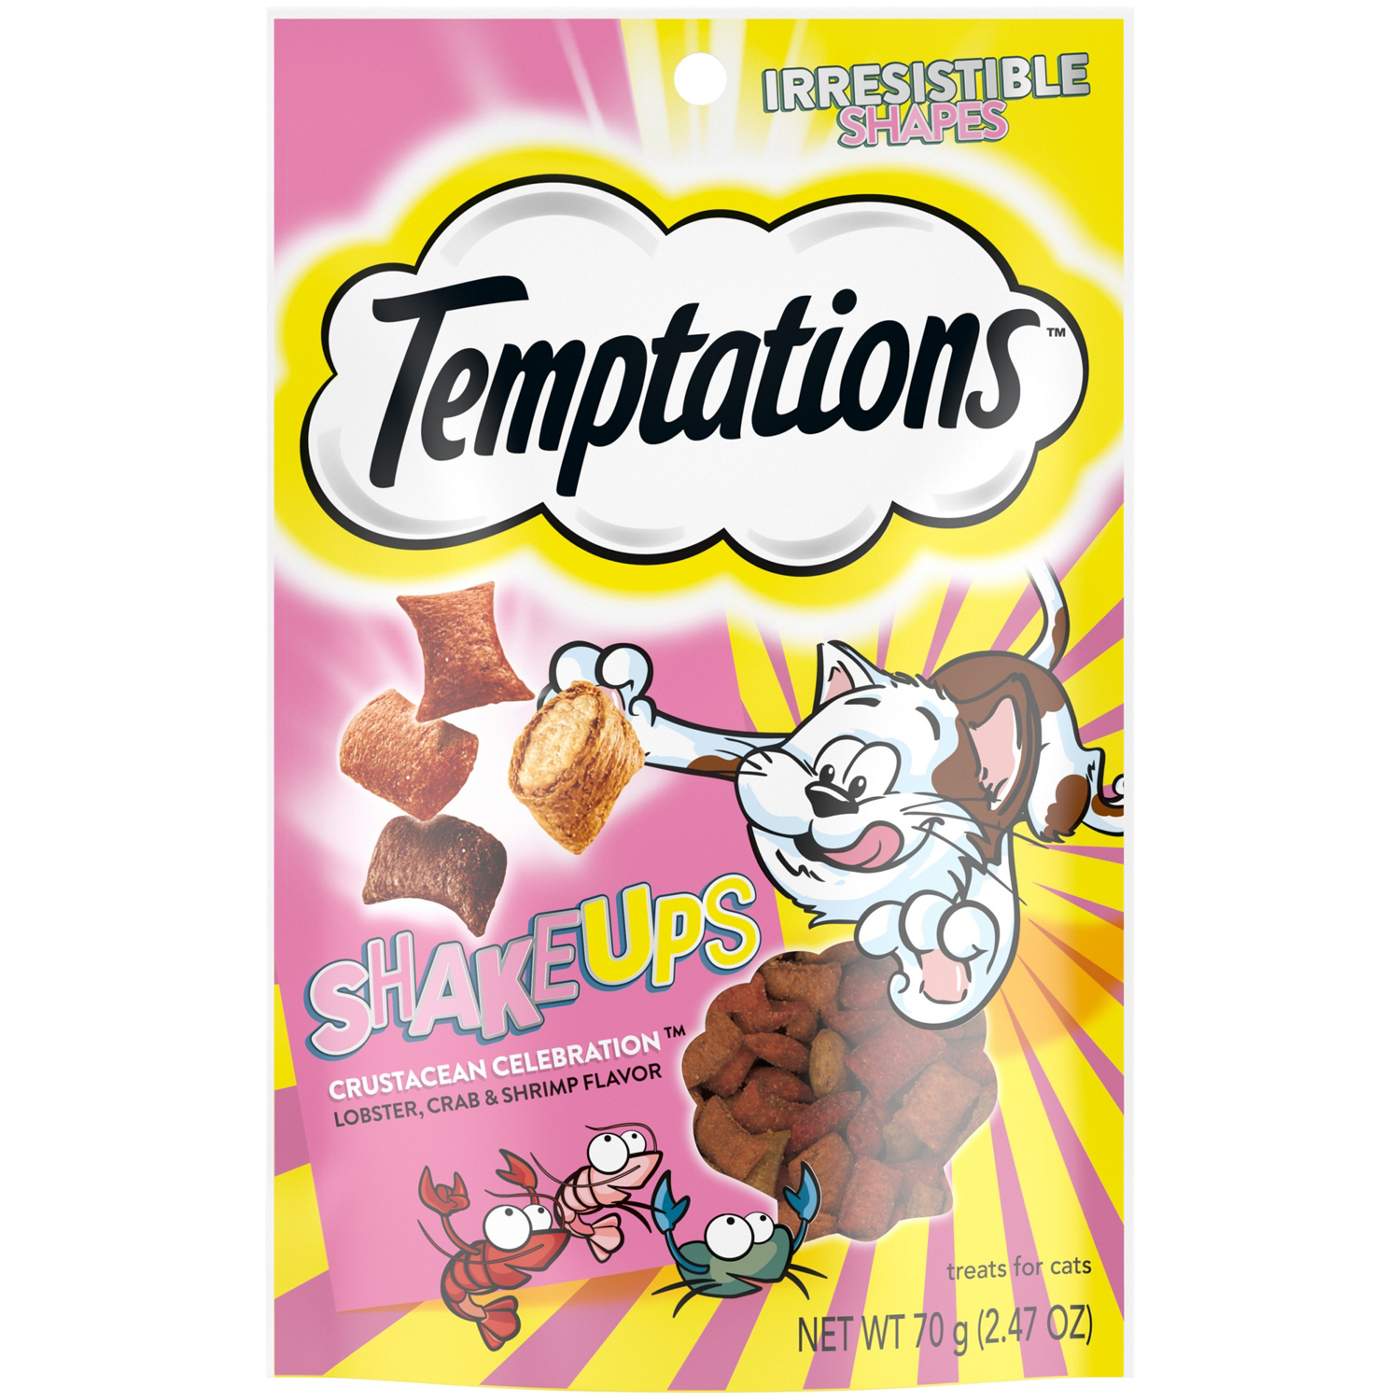 Temptations ShakeUps Crunchy and Soft Cat Treats Crustacean Celebration Flavor; image 1 of 5